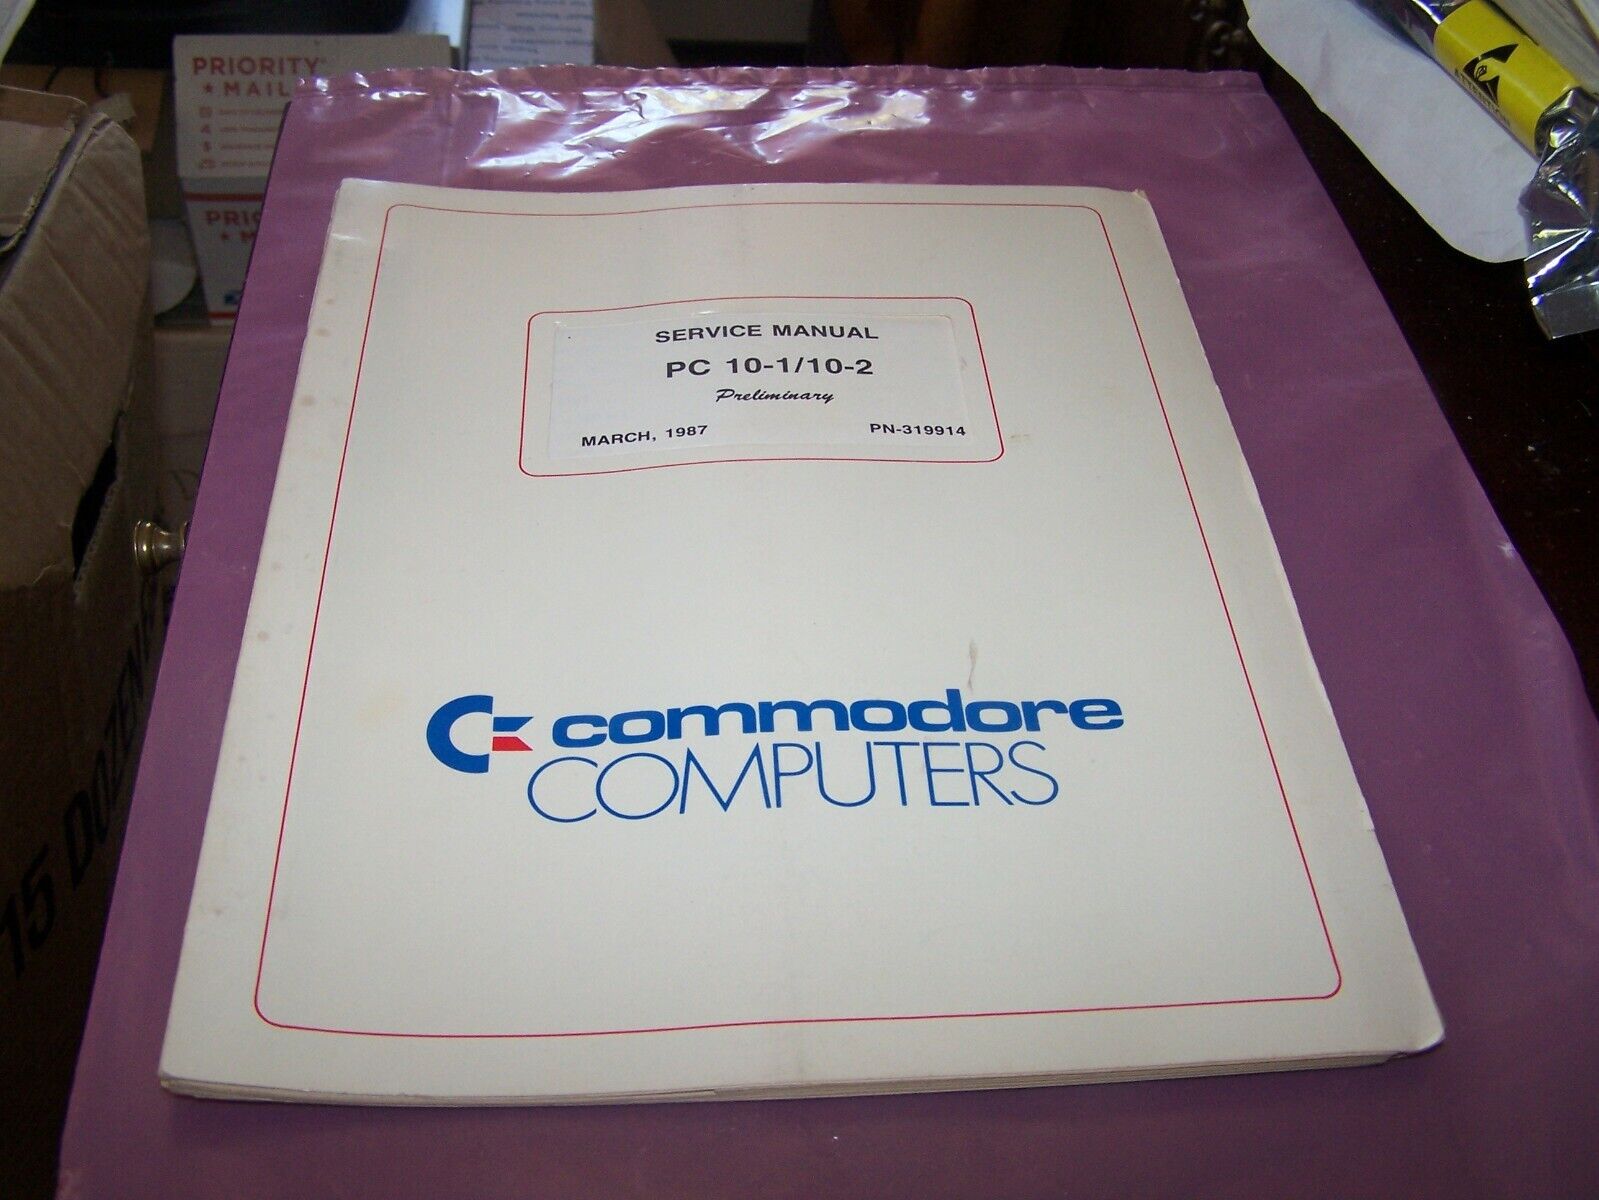 Computer Computers Service Manual PC 10-1/10-2 Preliminary March 1987 PN-319914